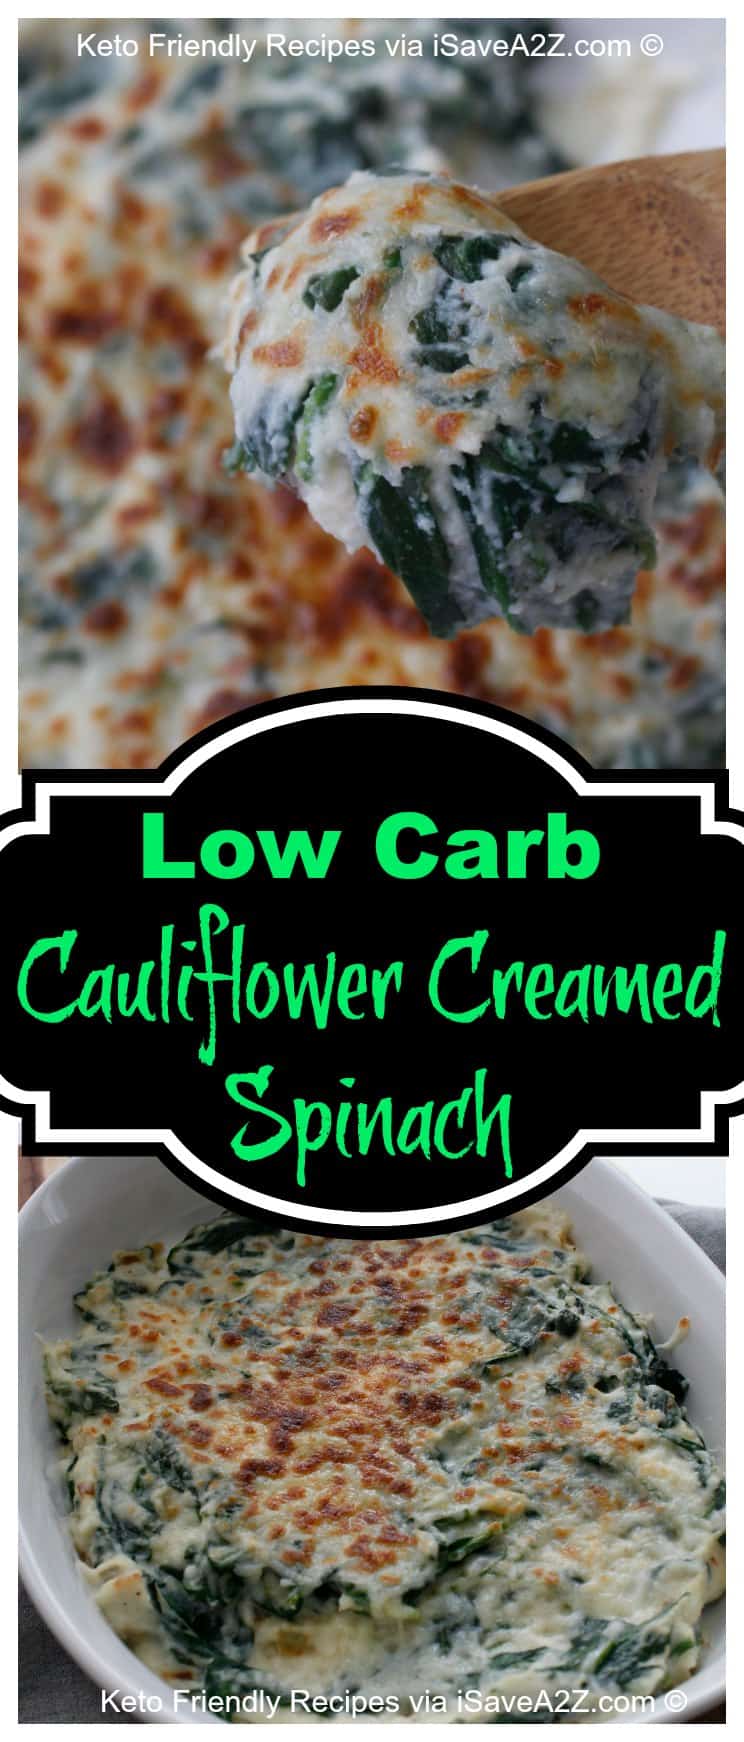 Low Carb Cauliflower Creamed Spinach Recipe